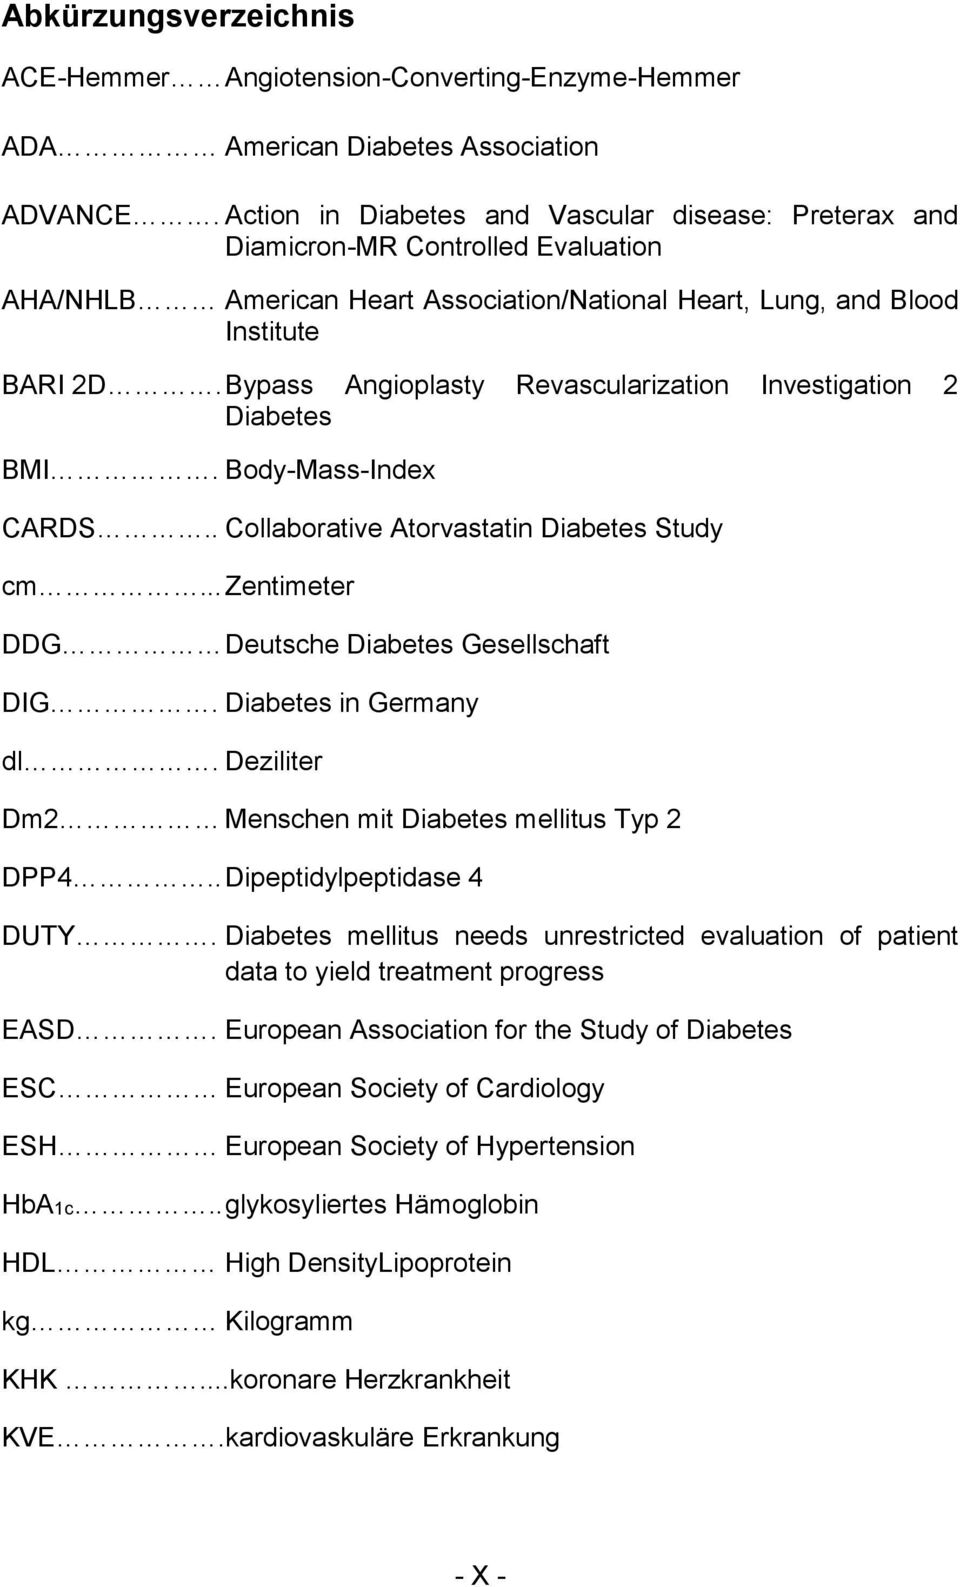 Bypass Angioplasty Revascularization Investigation 2 Diabetes BMI. Body-Mass-Index CARDS.. Collaborative Atorvastatin Diabetes Study cm... Zentimeter DDG Deutsche Diabetes Gesellschaft DIG.